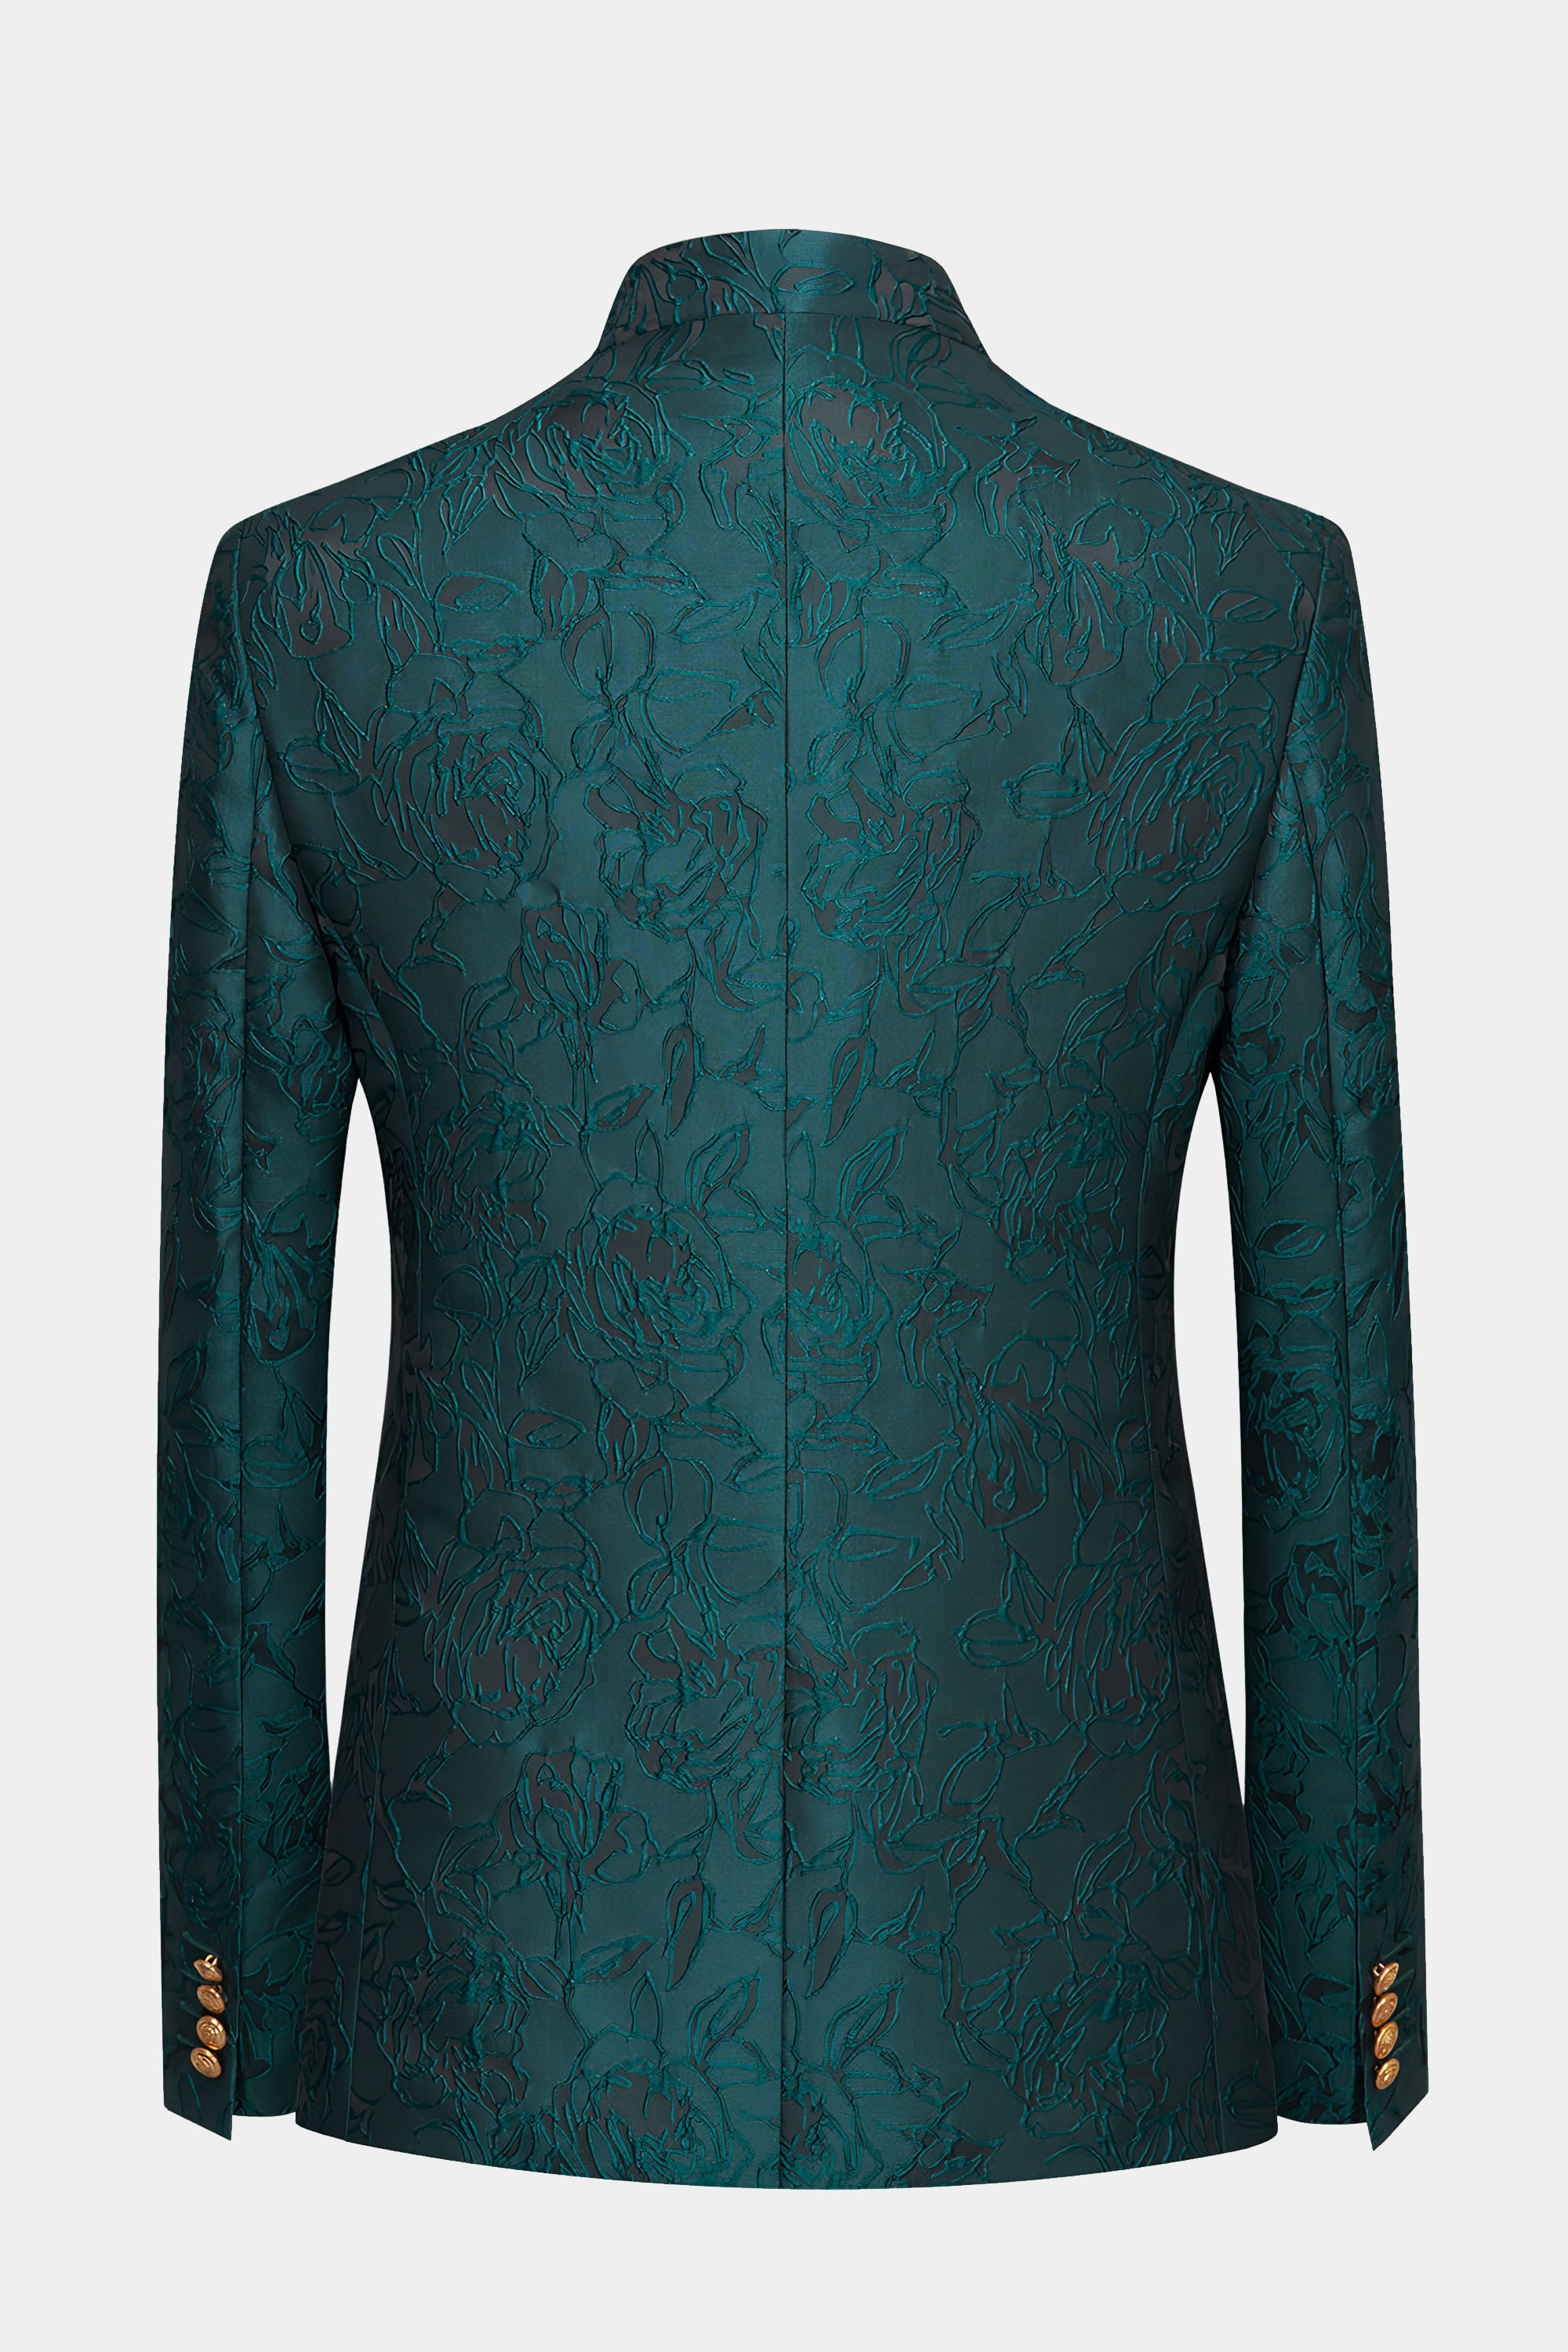 Dark-Teal-Mao-Style-Chinese-Collar-Suit-Jacket-Blazer-from-Gentlemansguru.com